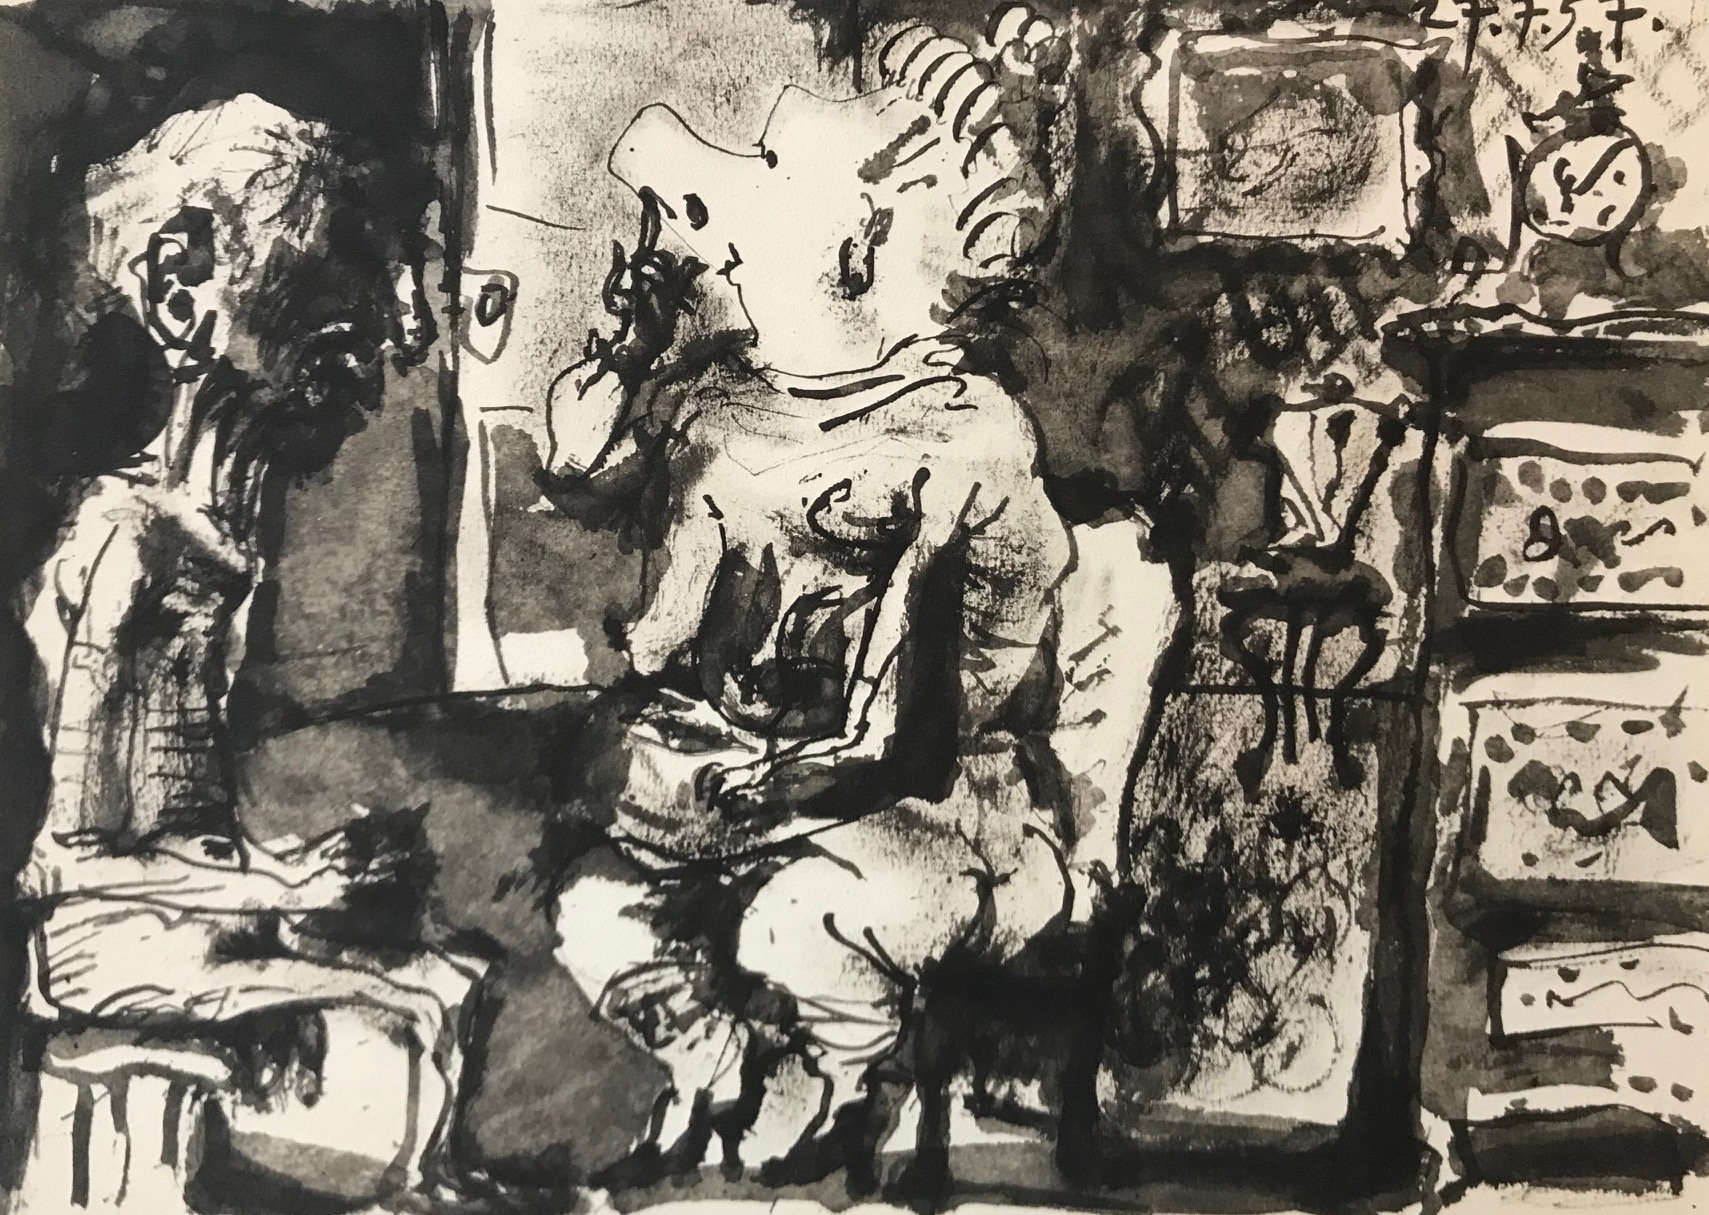 Picasso Toros Y Toreros dated 27/7/59